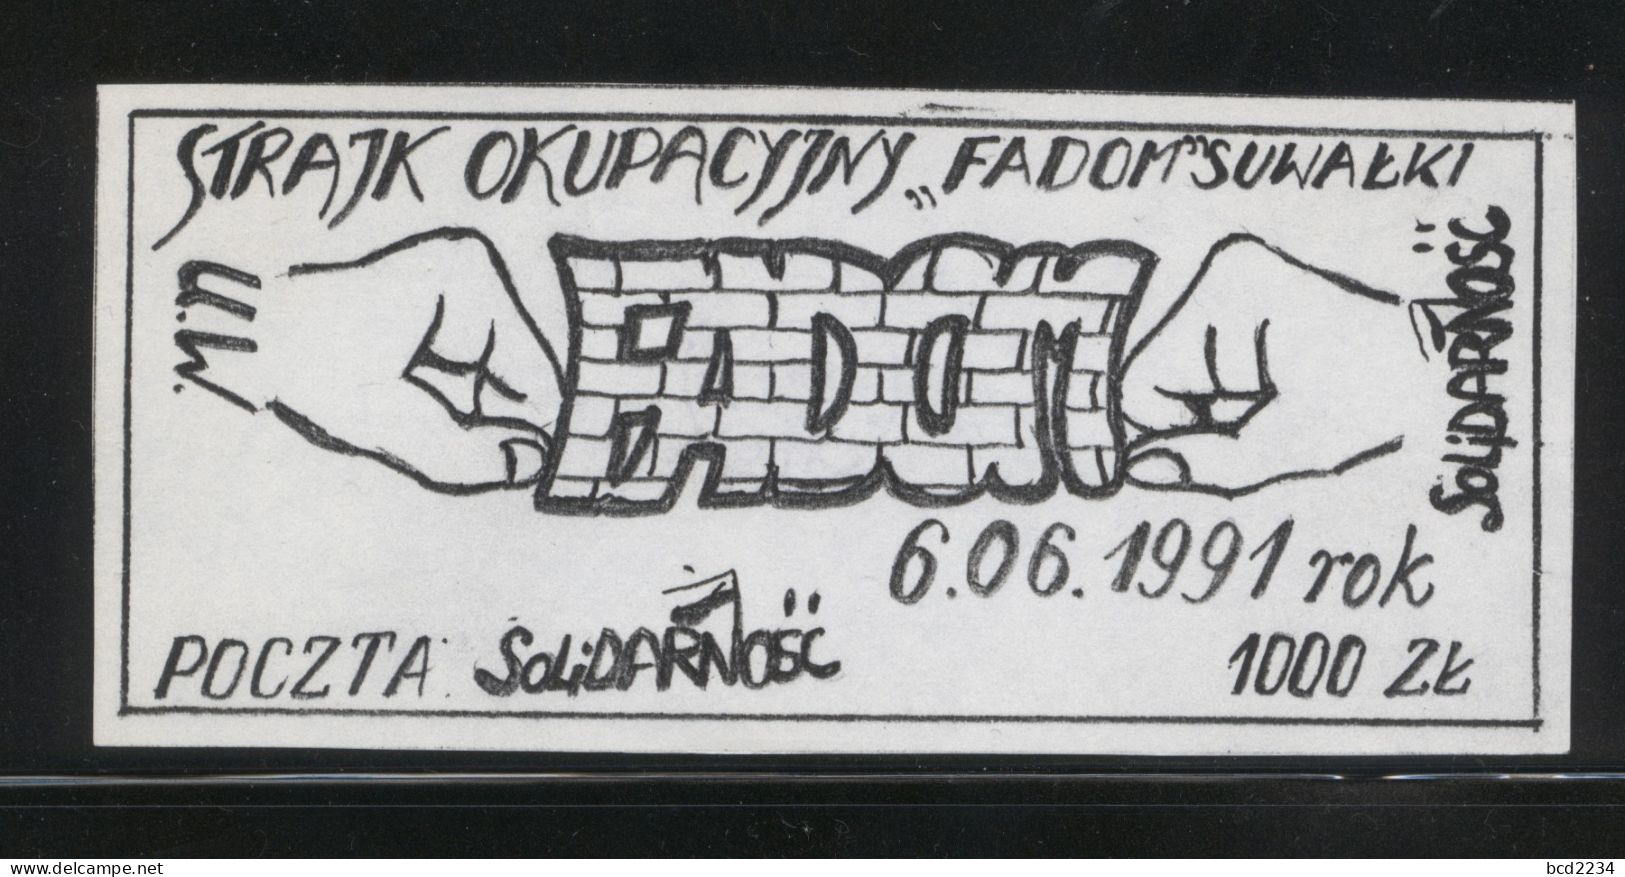 POLAND SOLIDARITY SOLIDARNOSC 1991 NZS FADOM OCCUPATIONAL STRIKE SUWALKI - RECTANGULAR (SOLID 1295/1001) - Solidarnosc Labels